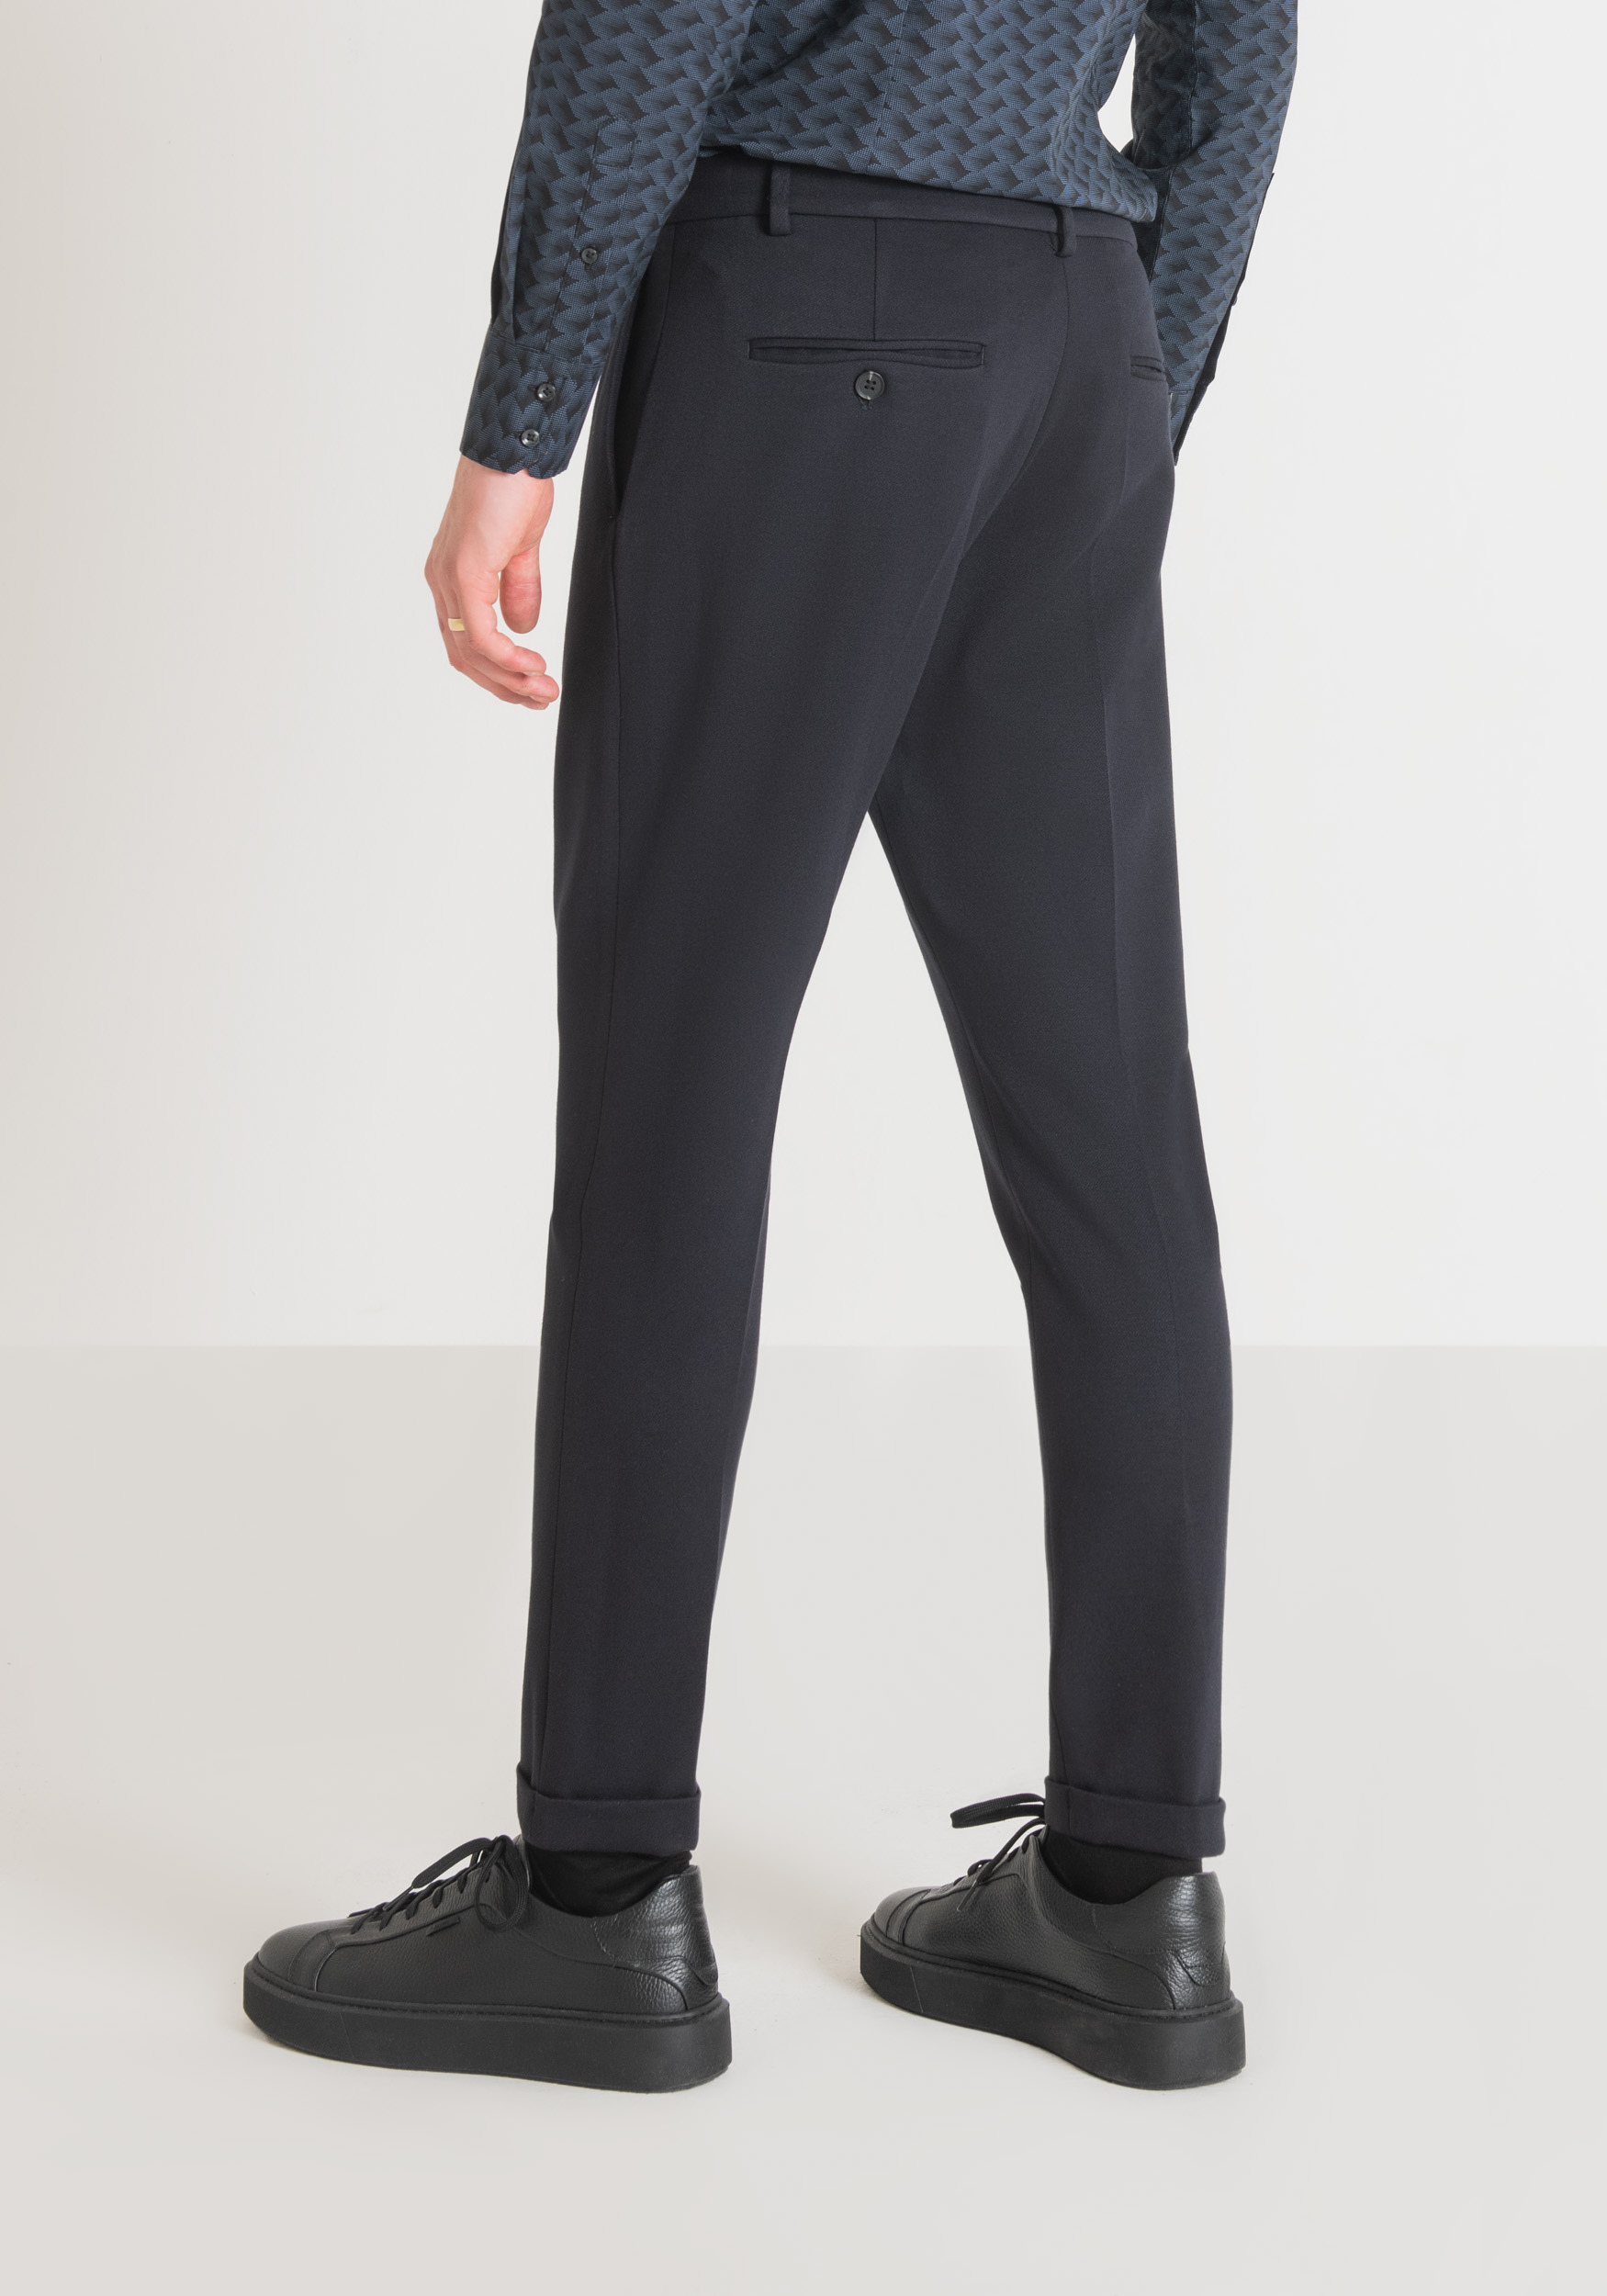 Antony Morato Pantalon Super Skinny Fit Ashe En Viscose Melangee De Couleur Unie Encre Bleu | Homme Pantalons